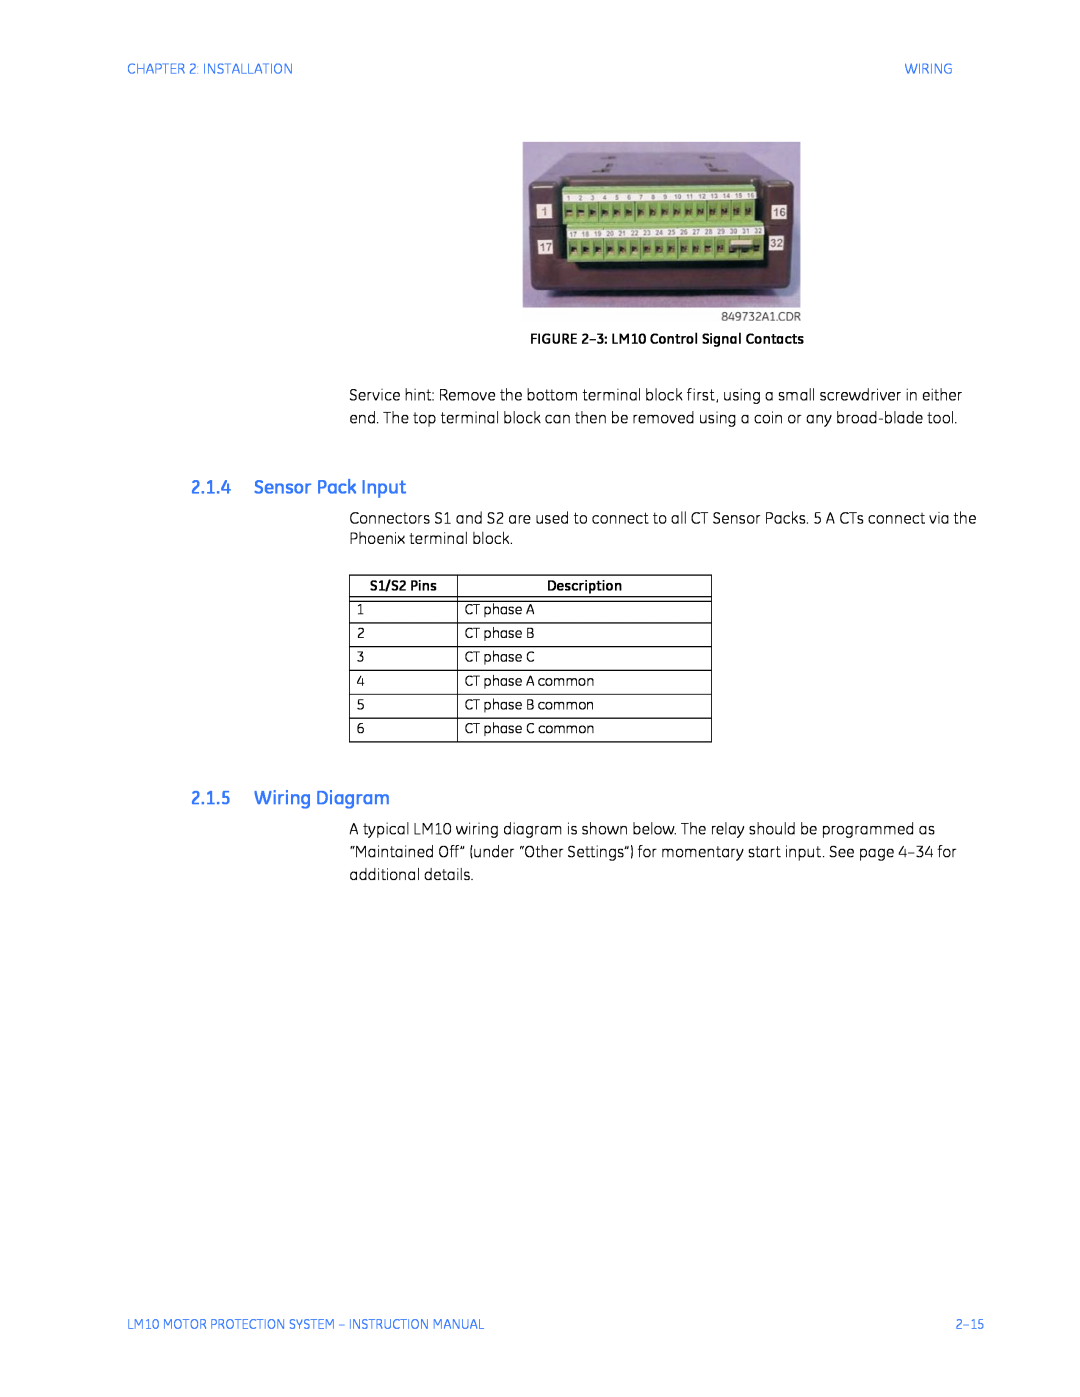 GE LM10, Motor Protection System instruction manual Sensor Pack Input, Wiring Diagram 